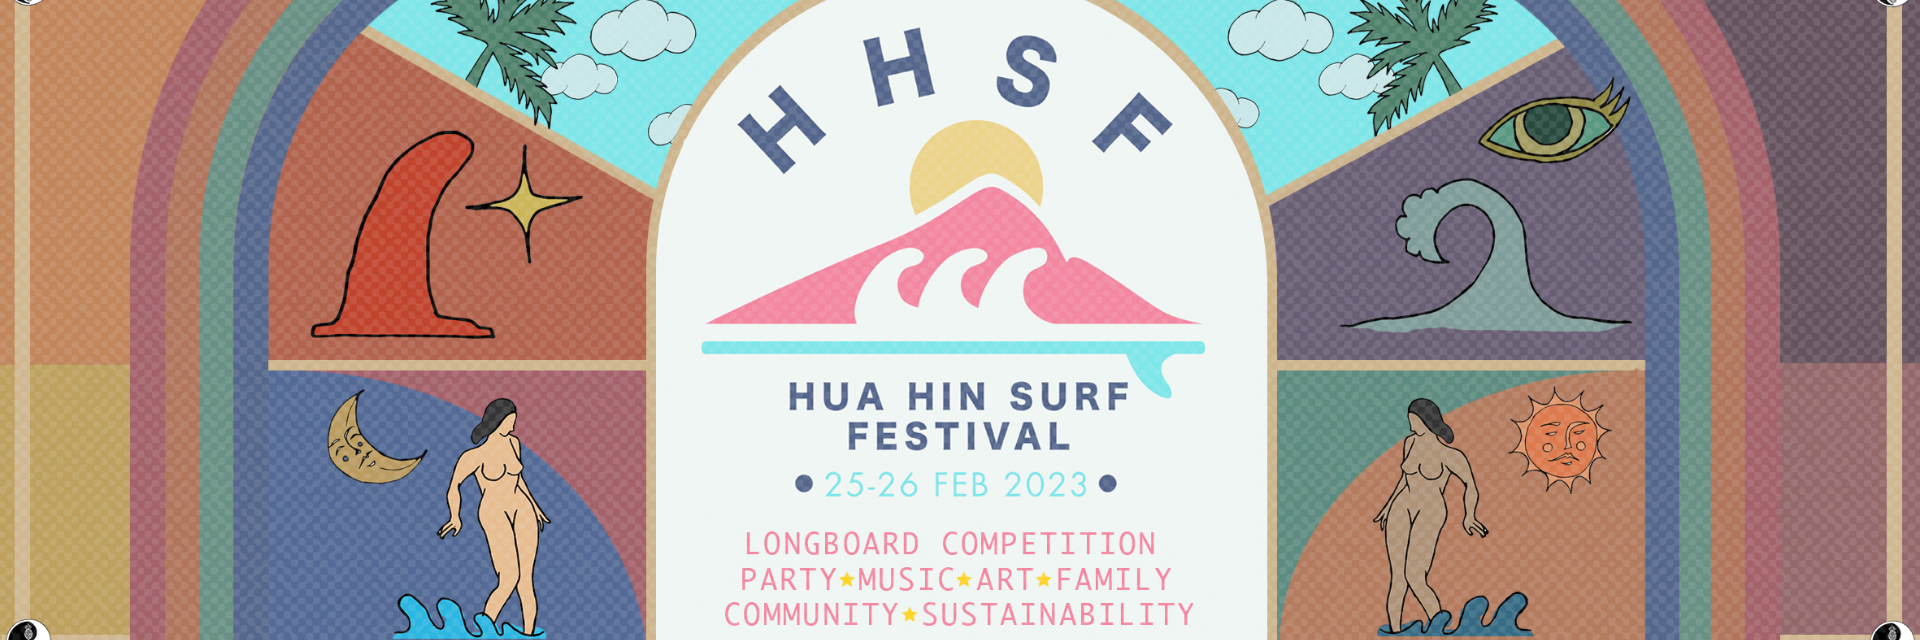 Hua Hin Surf Festival